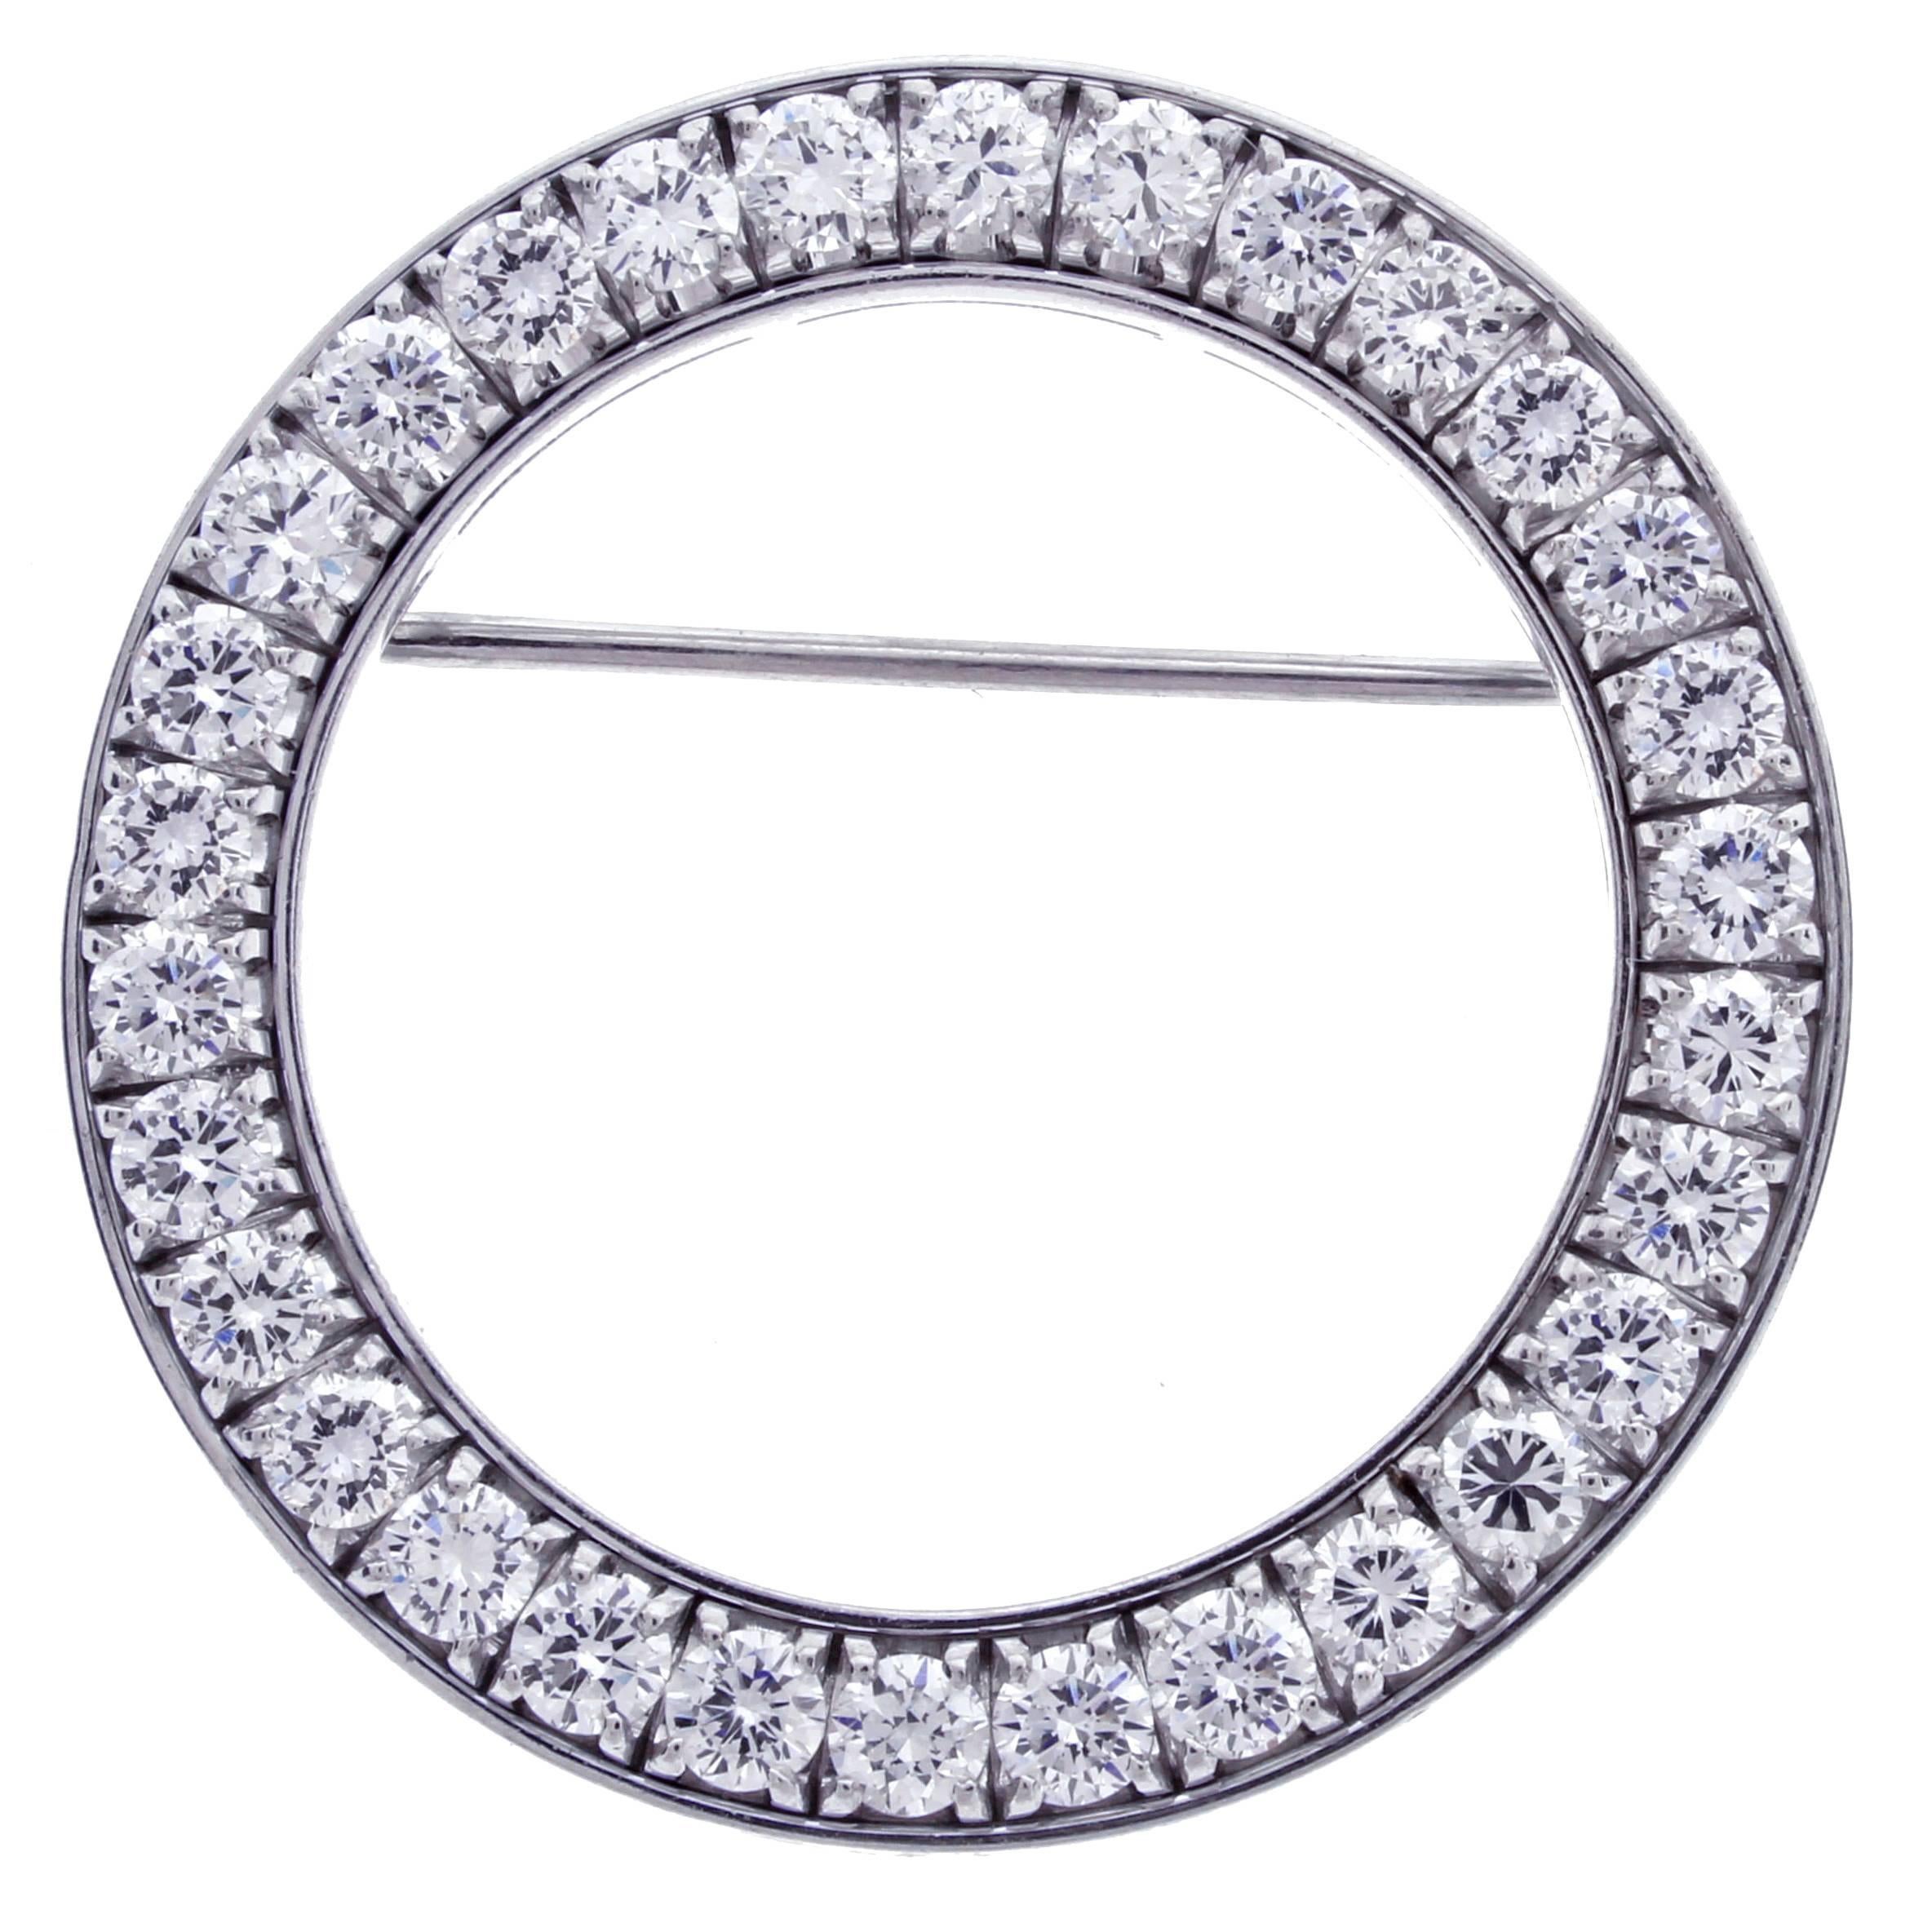 1930s Cartier Diamond Platinum Circle Brooch